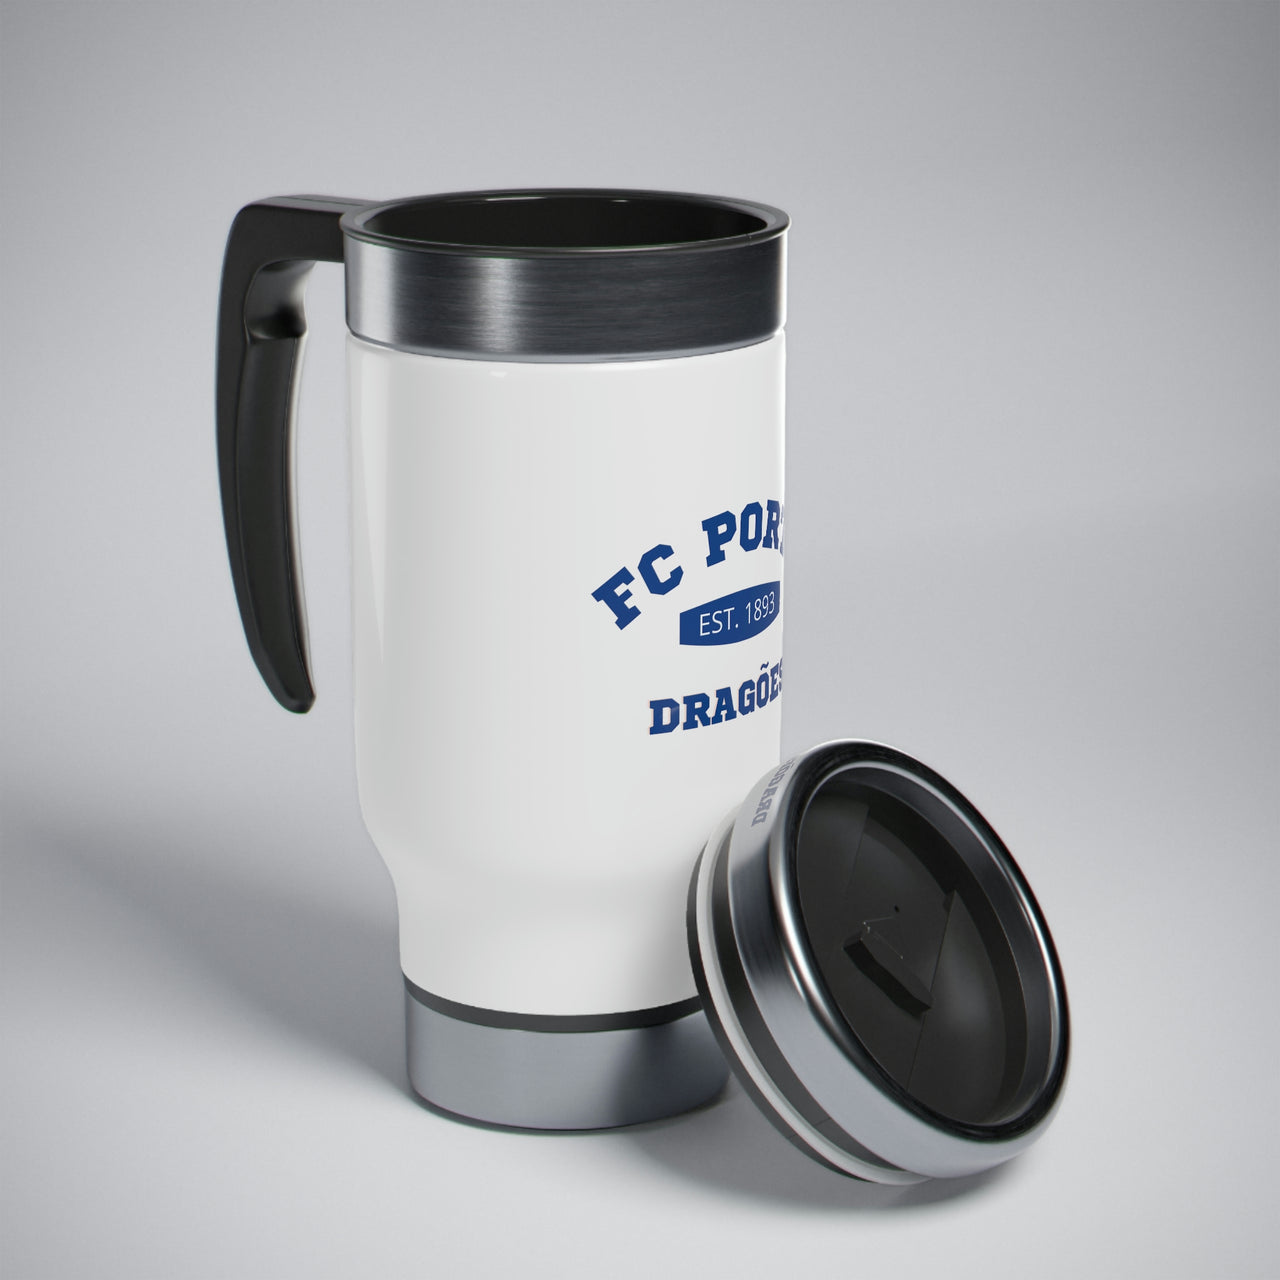 Porto Stainless Steel Travel Mug with Handle, 14oz